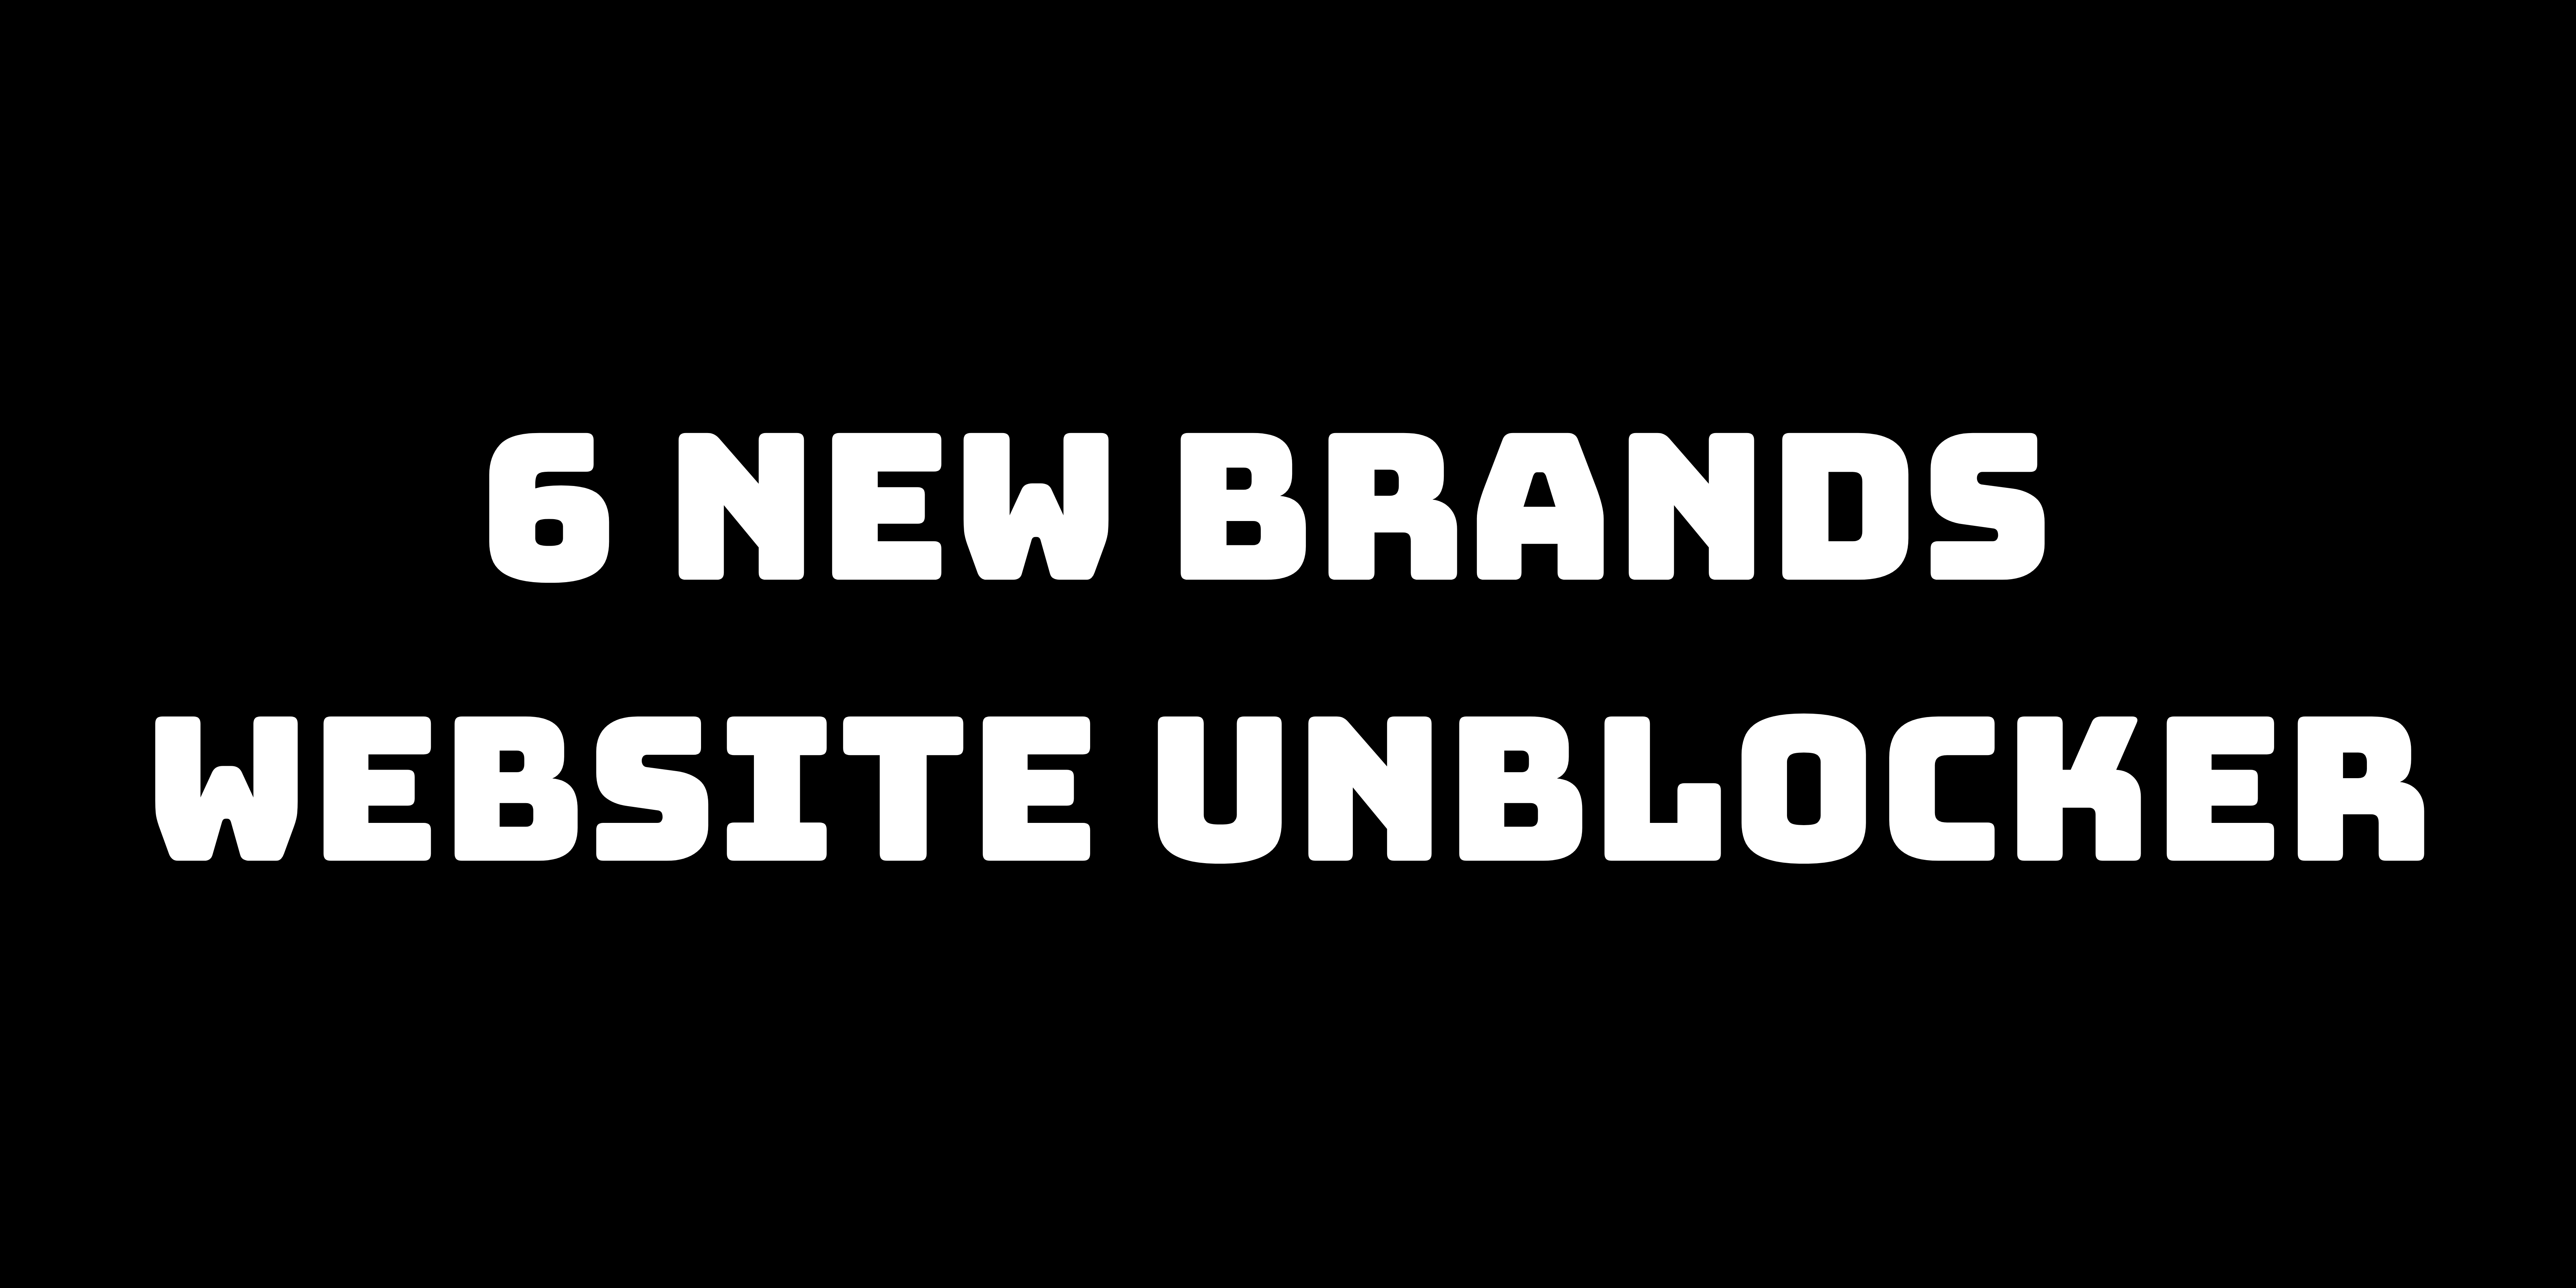 website unblocker